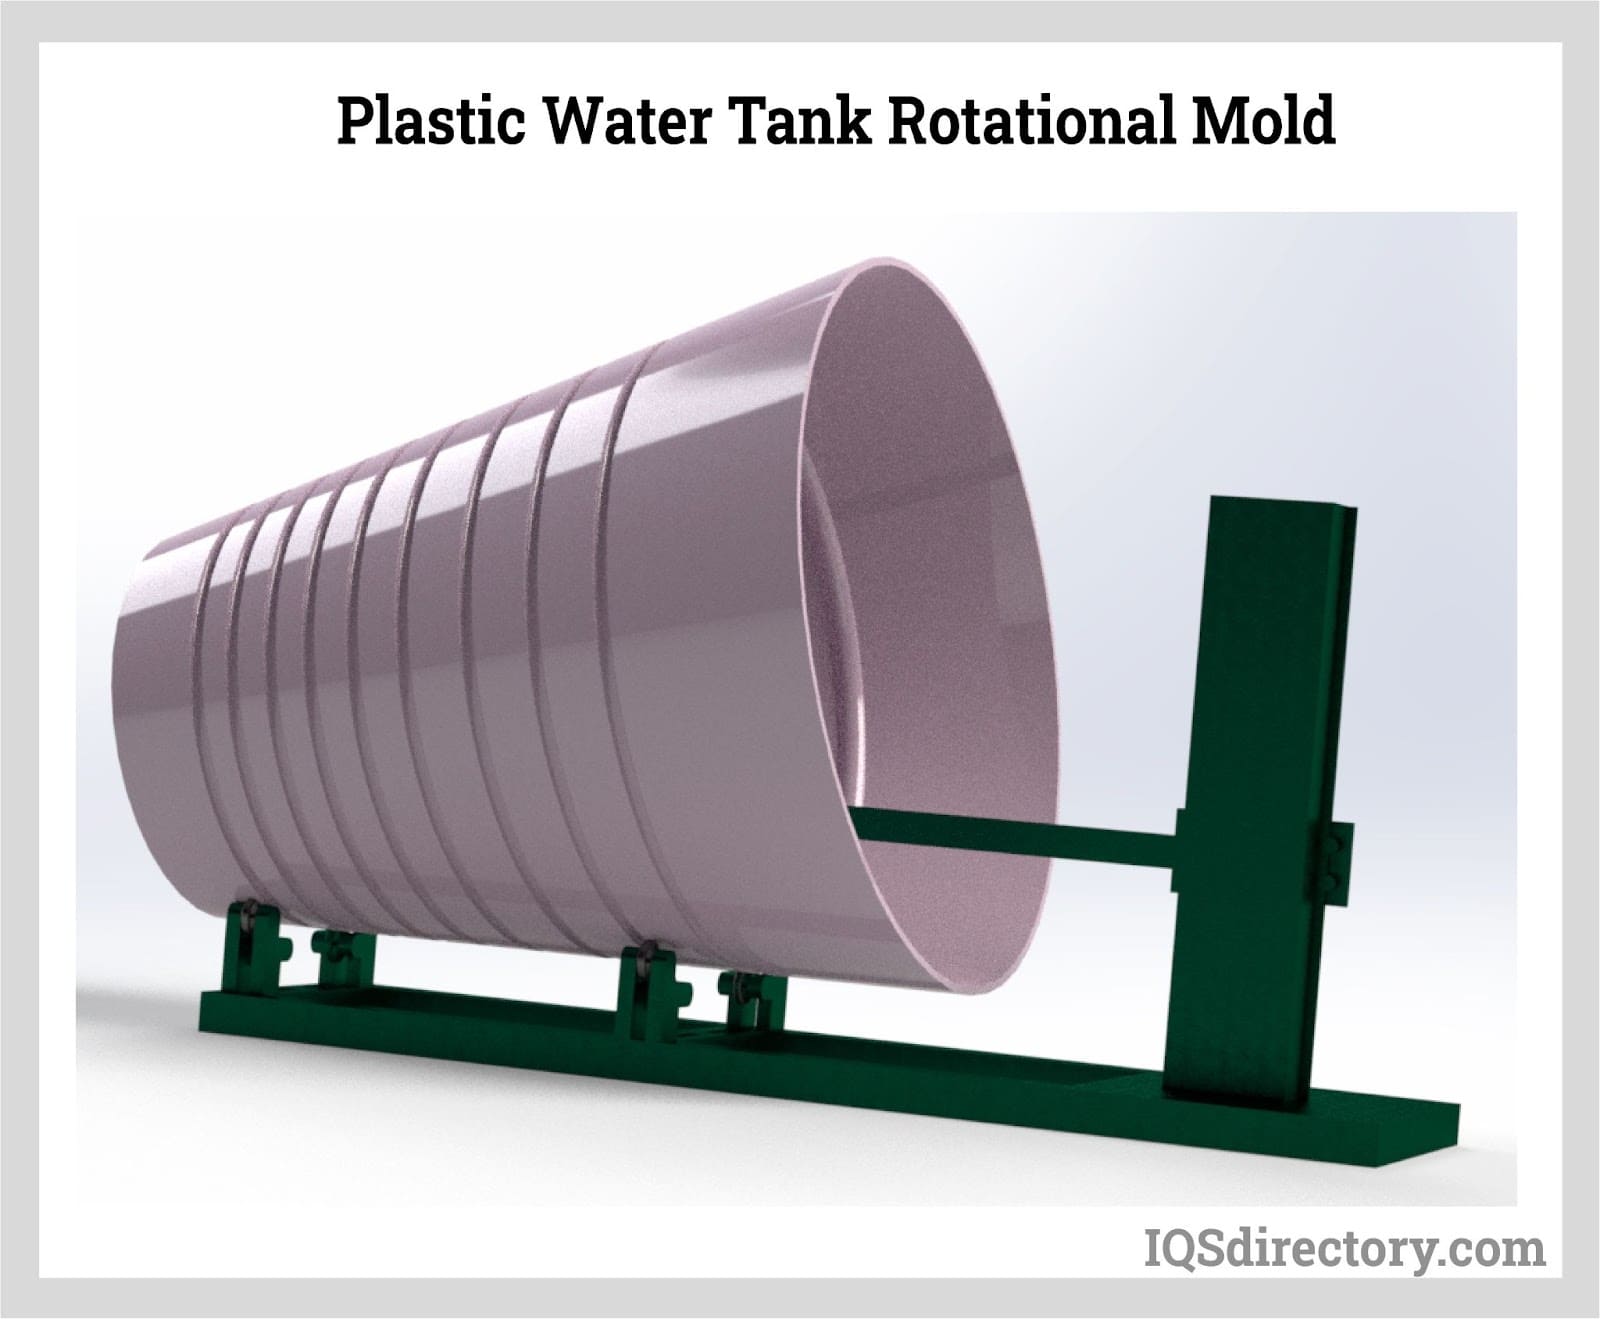 Plastic Water Tank Rotational Mold